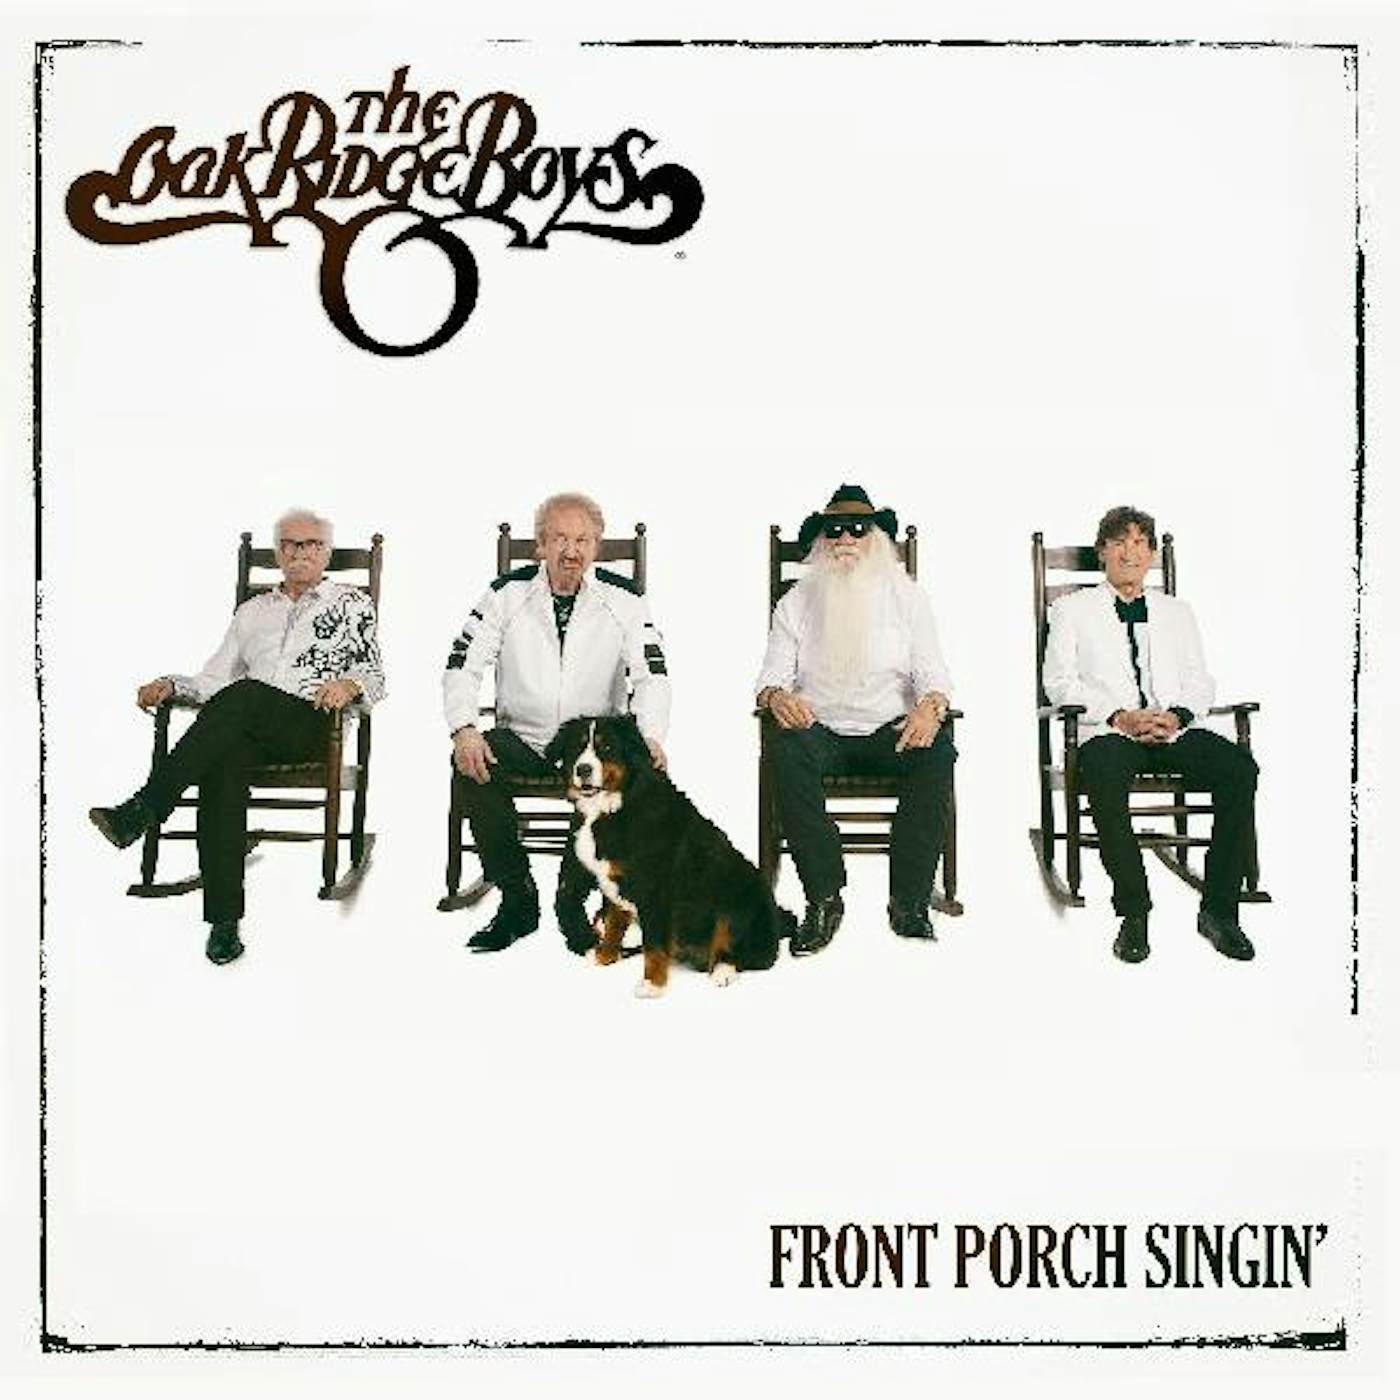 The Oak Ridge Boys FRONT PORCH SINGIN' CD